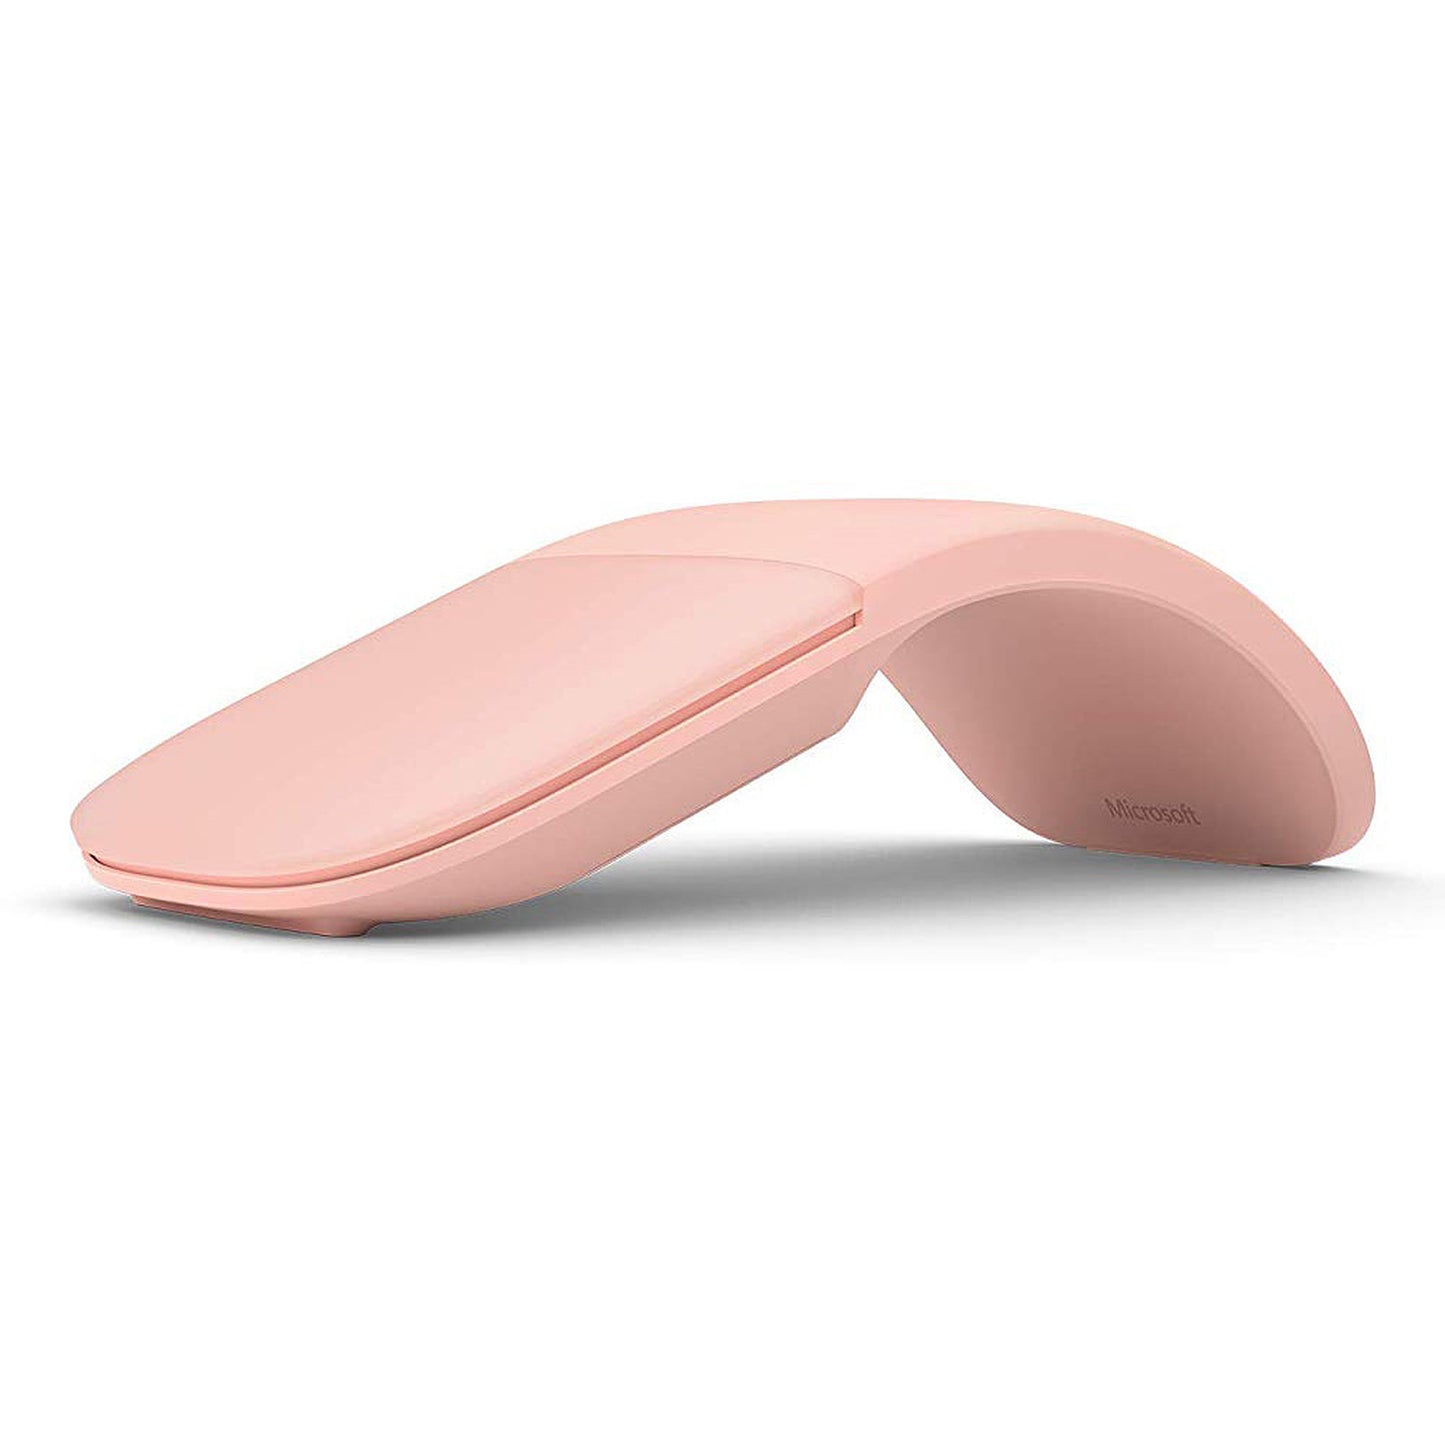 Microsoft Arc Wireless Mouse - Light Pink